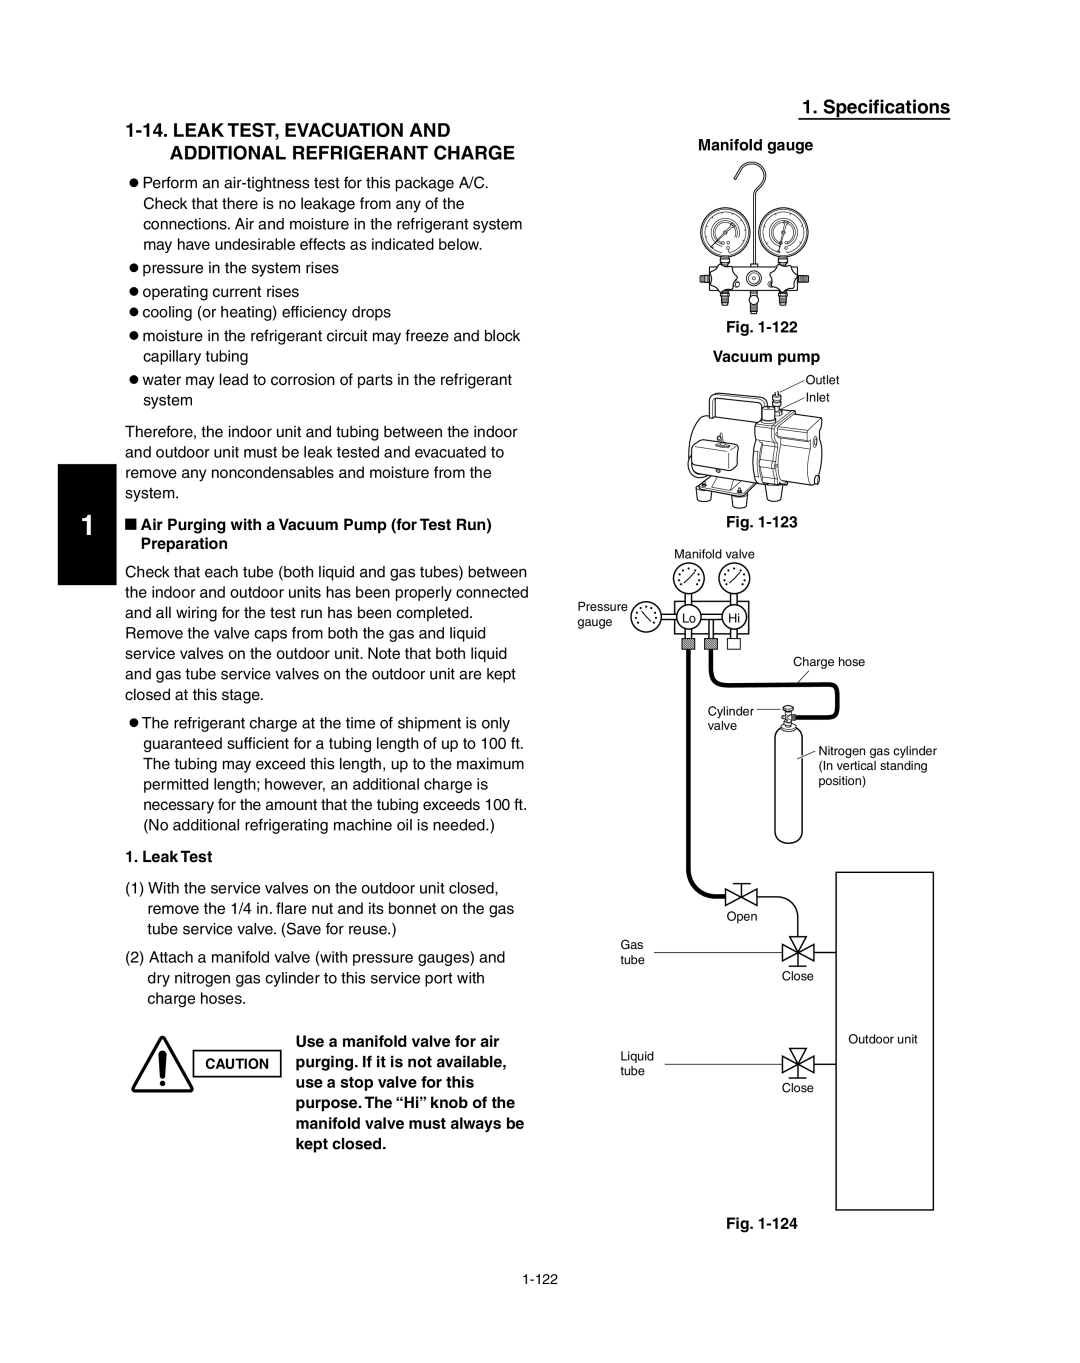 Panasonic R410A service manual Specifications, Manifold gauge Fig. Vacuum pump, Leak Test 